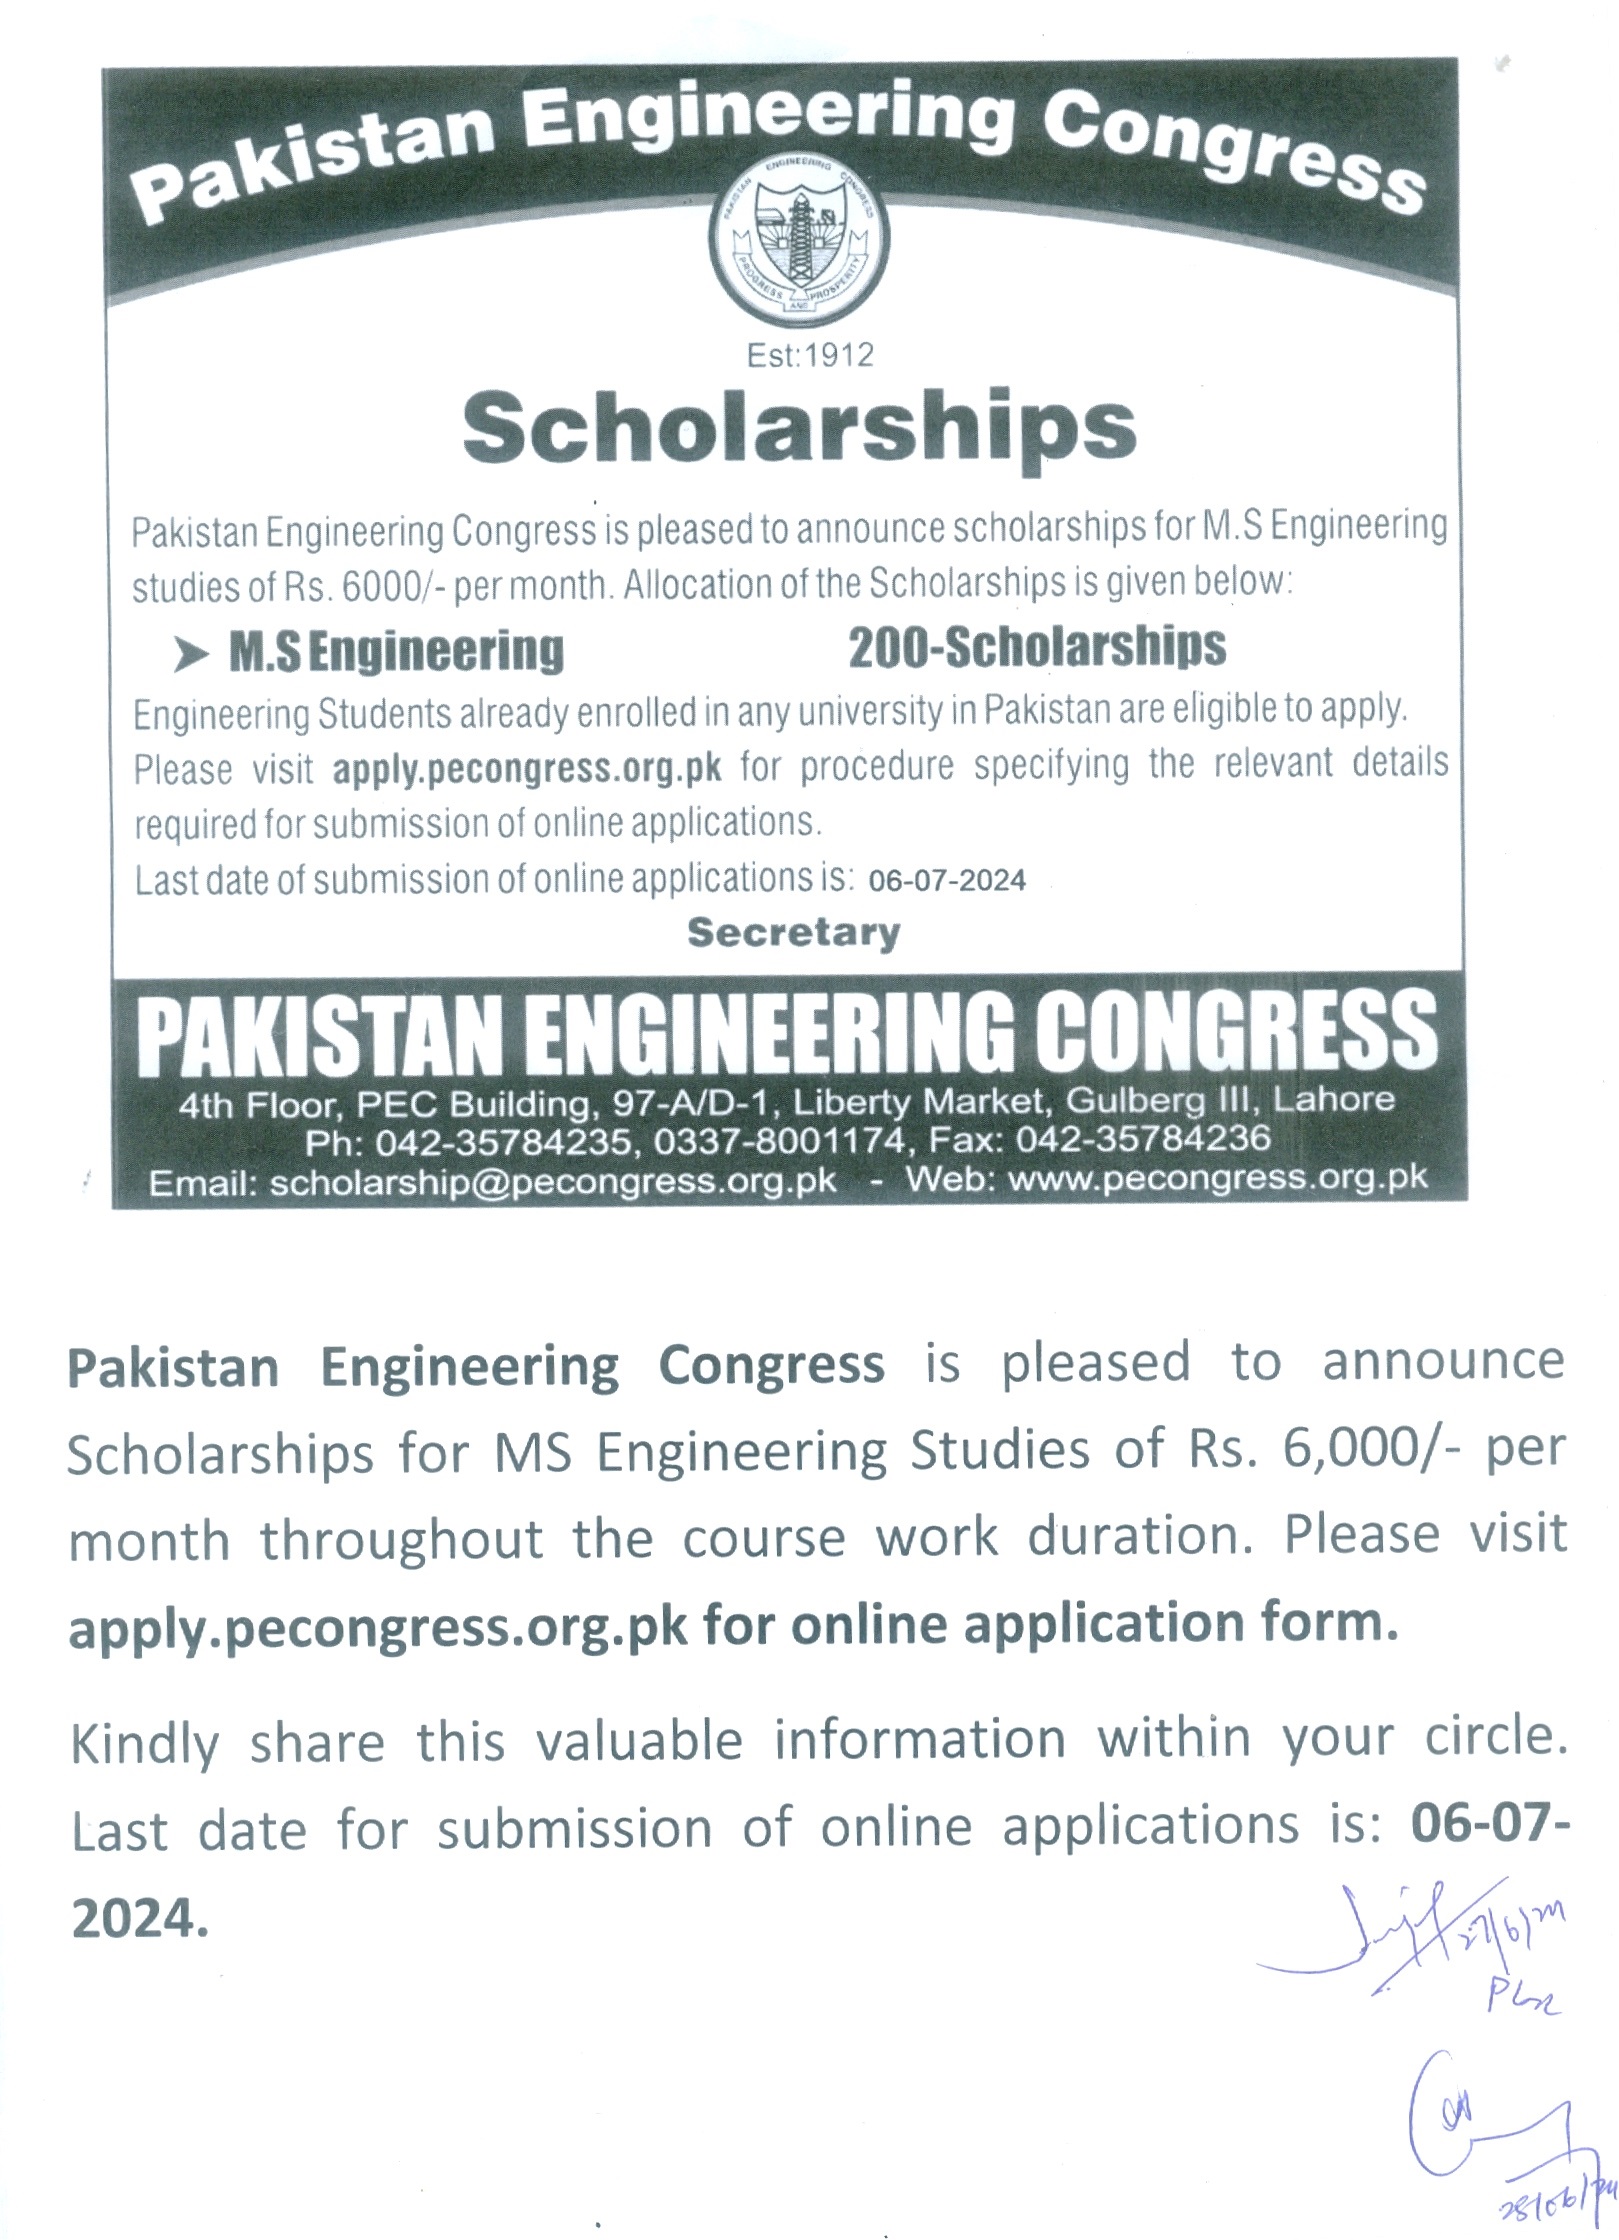 Pakistan Engineering Congress Scholarships